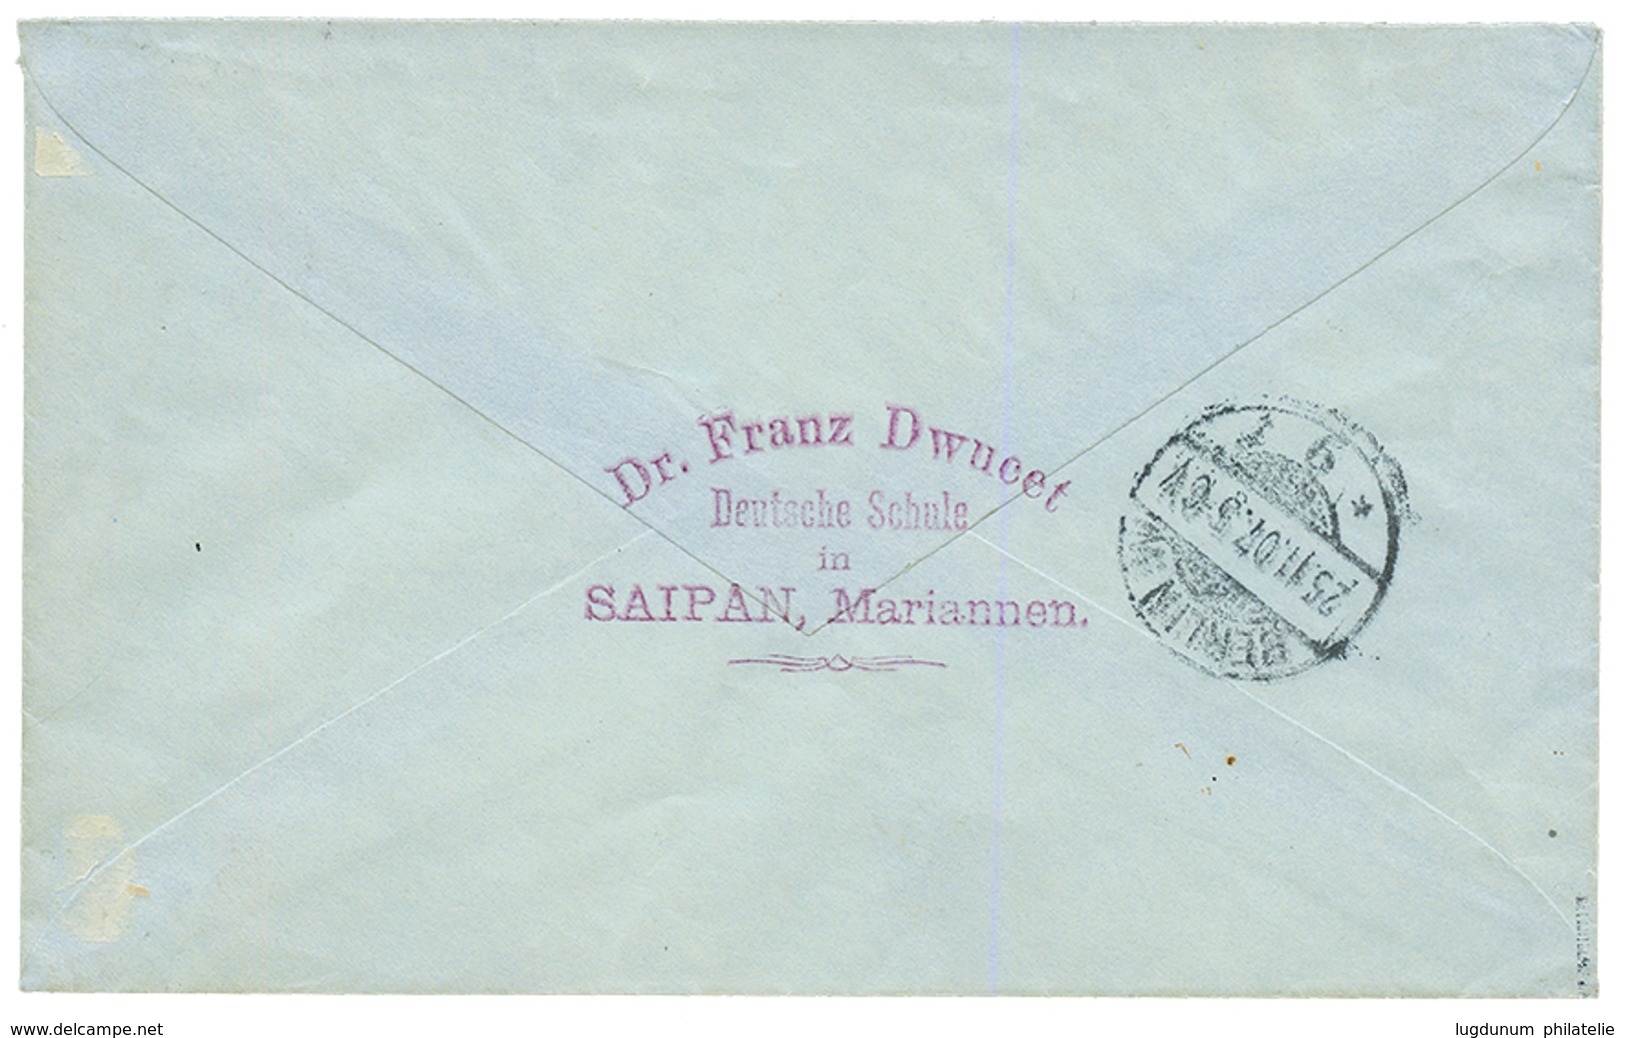 MARIANES : 1907 10pf Canc. SAIPAN MARIANEN On Envelope (DEUTSCHE SCHULE SAIPAN) To BERLIN. Signed LANTELME. Vvf. - Isole Marianne